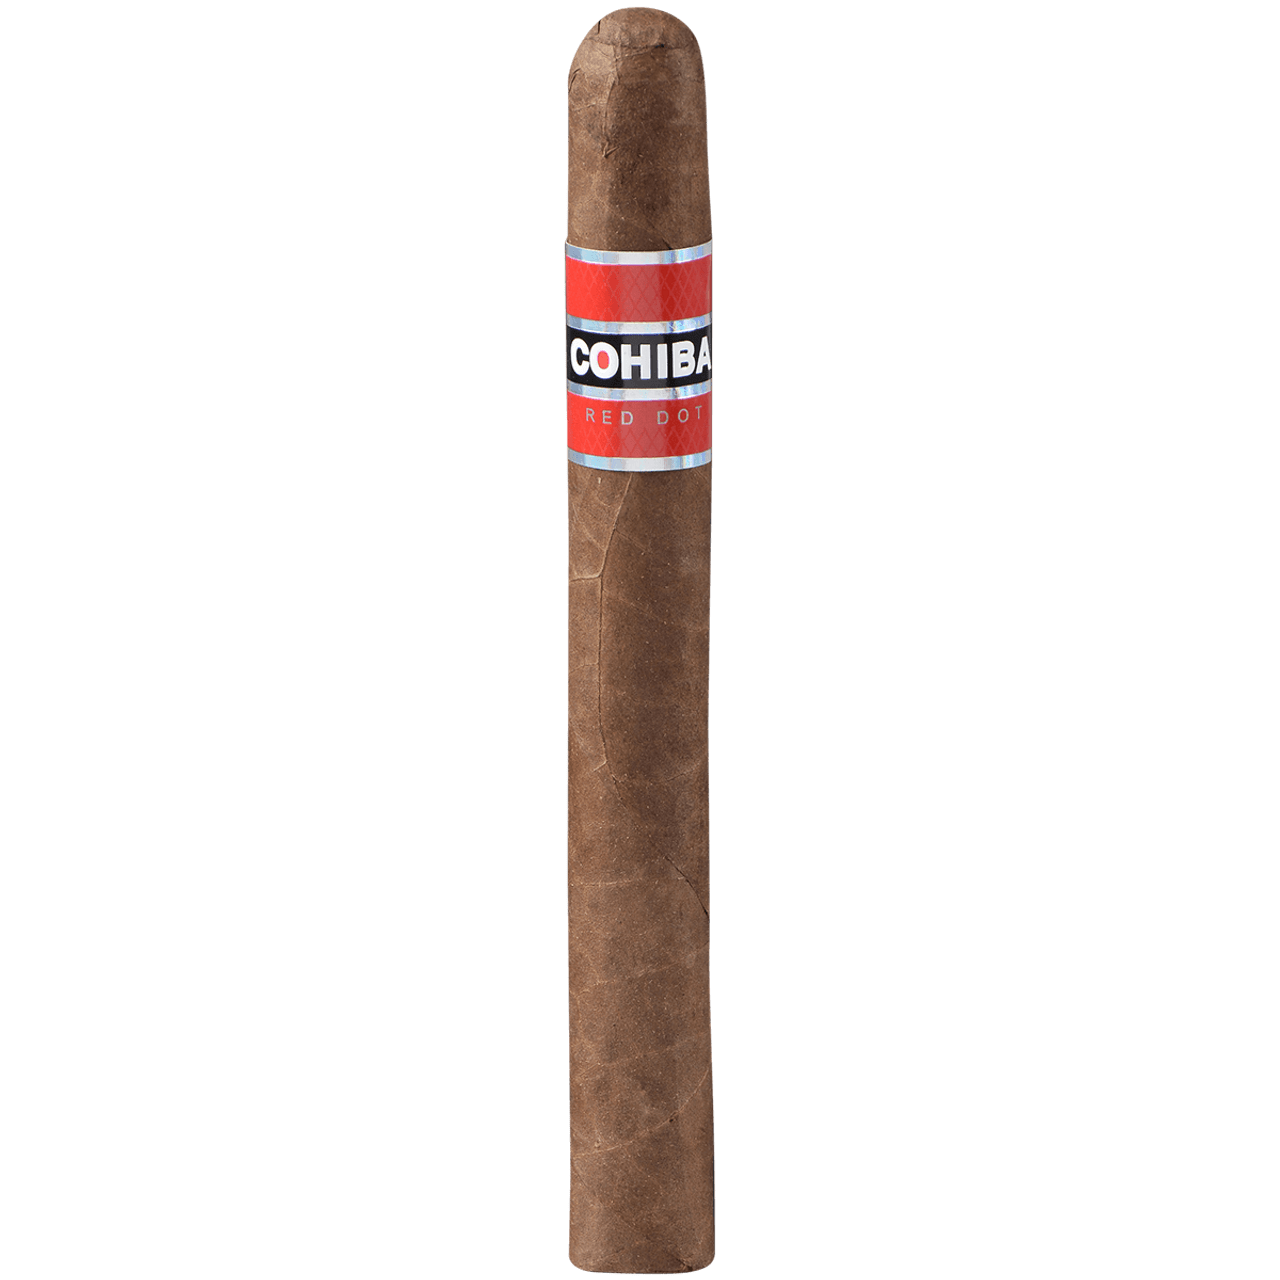 Cohiba Red Dot - Cigars International